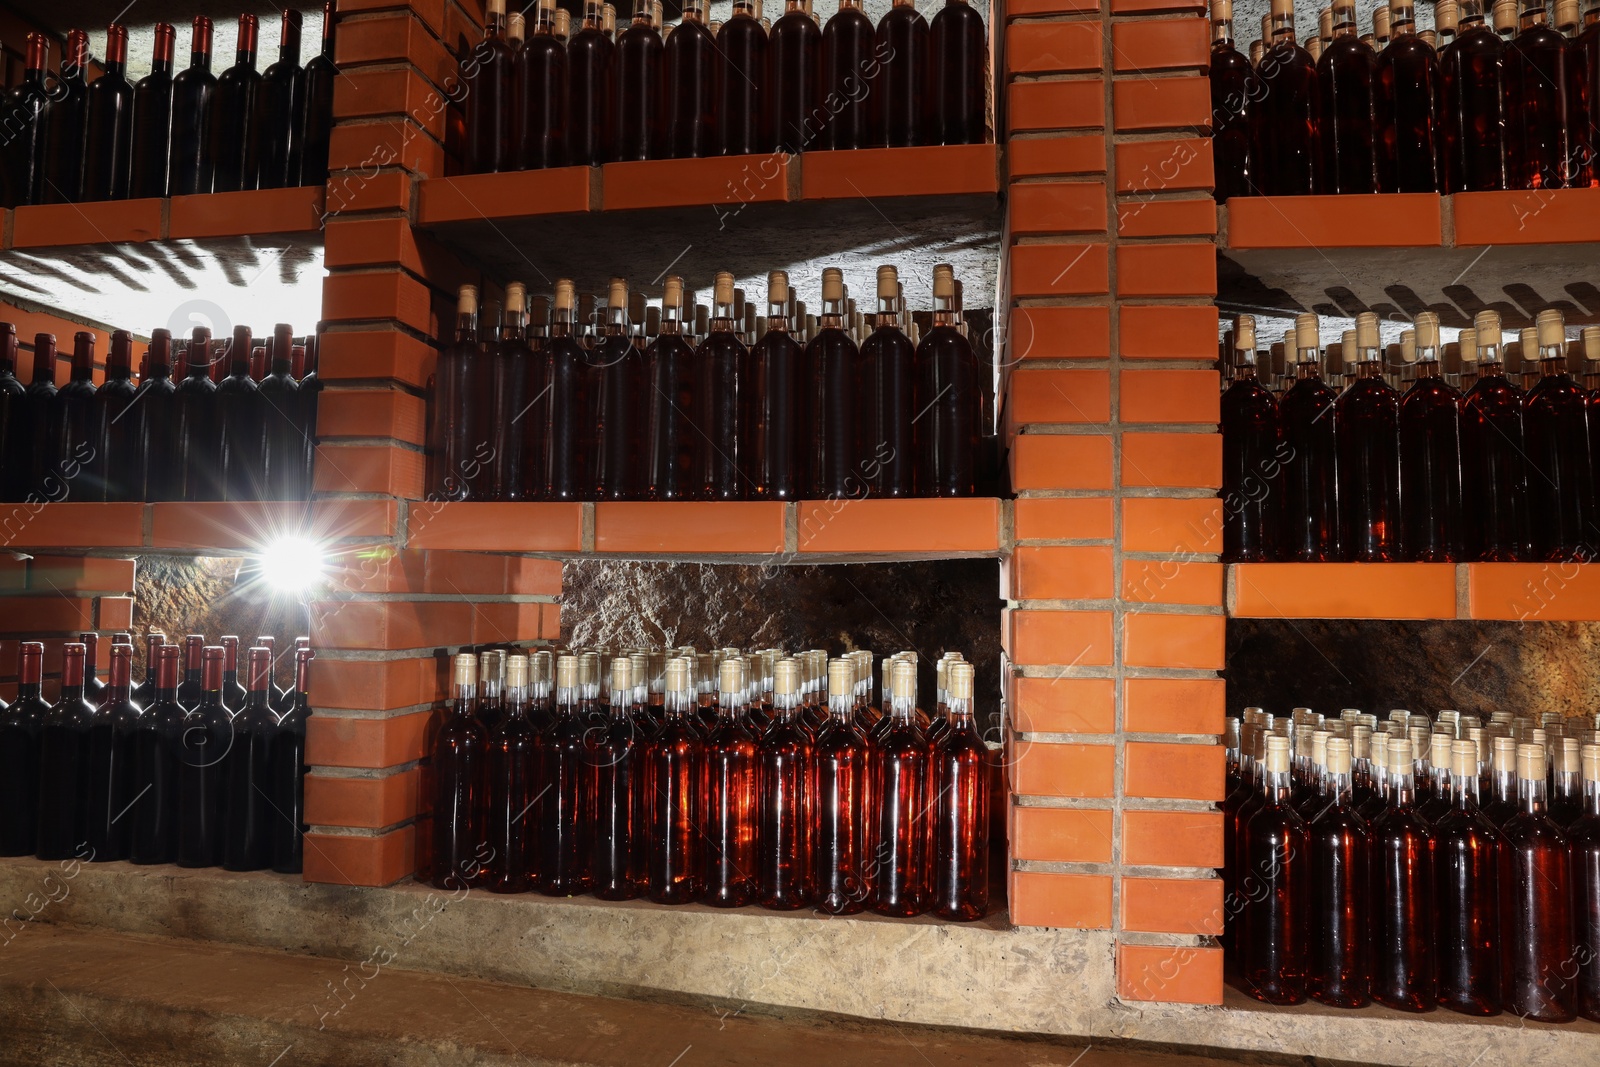 Photo of Many bottles of wine stored on shelves in cellar